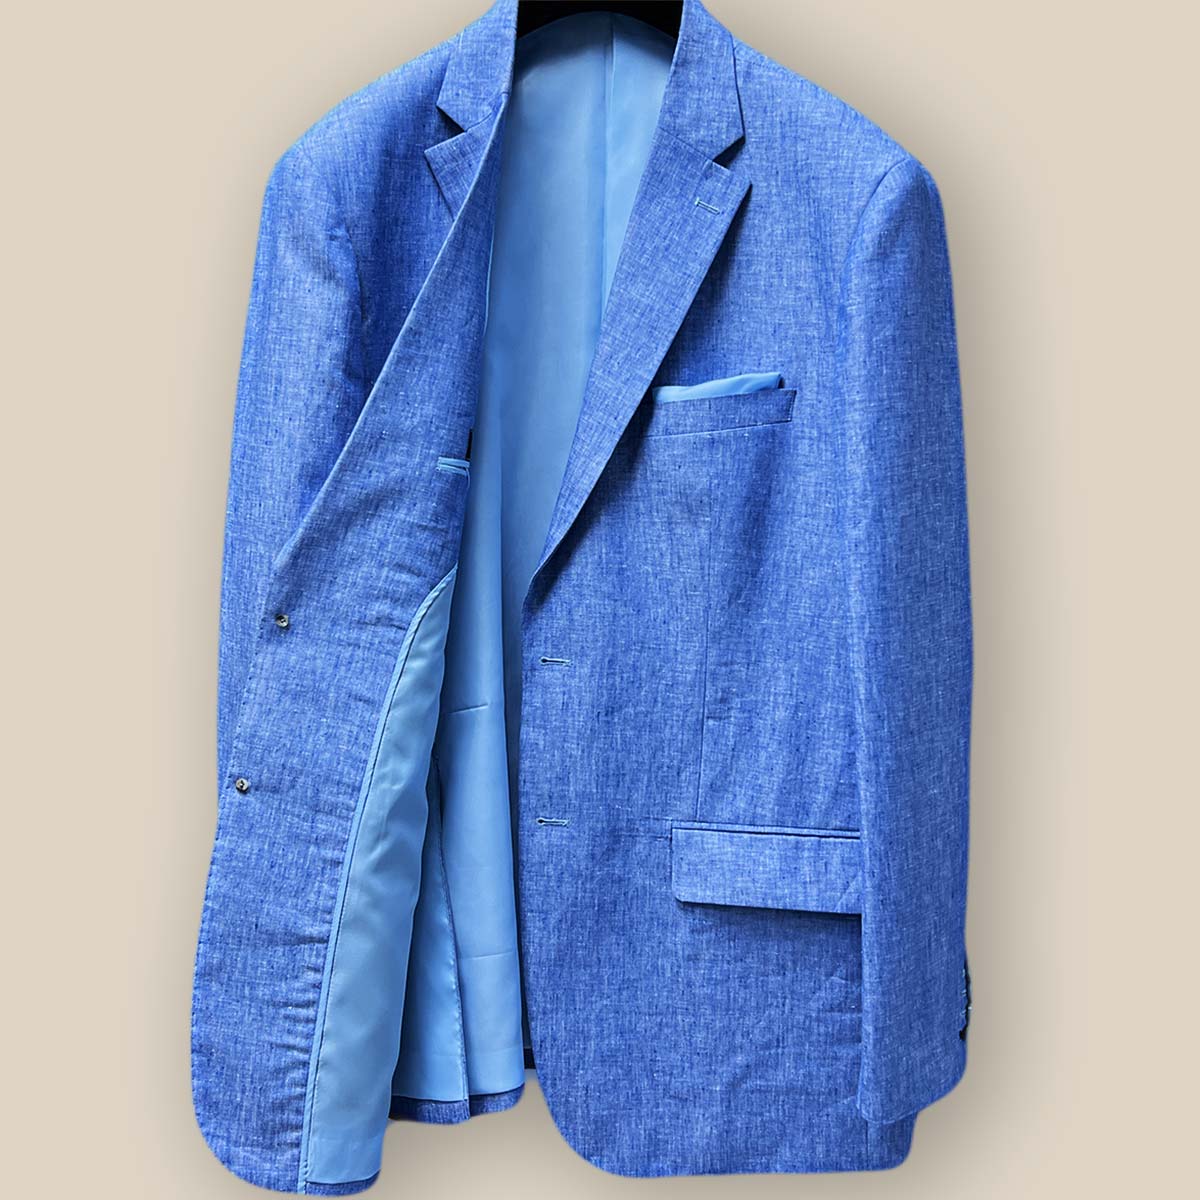 Interior view of light blue solid Irish linen men's suit jacket, showcasing sky blue bemberg silk lining on the left side